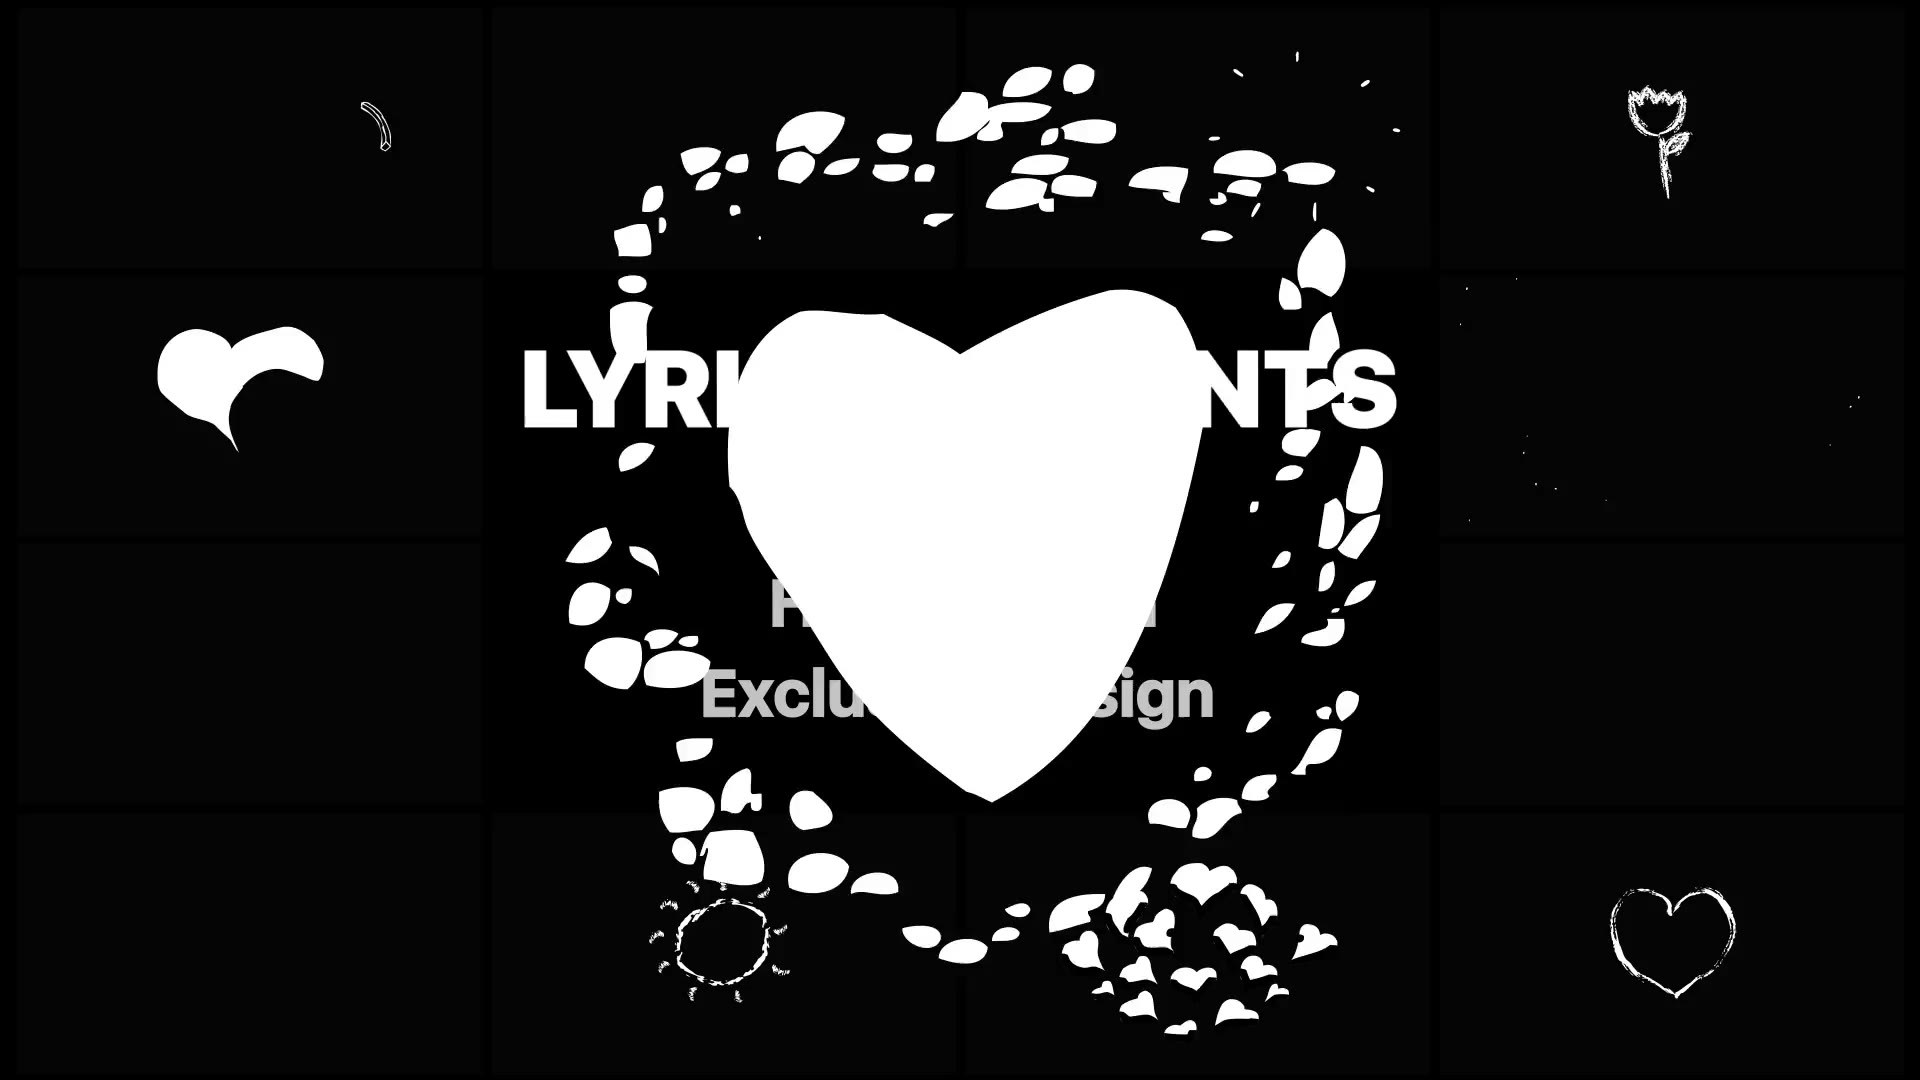 Lyric Elements - Download Videohive 23201513